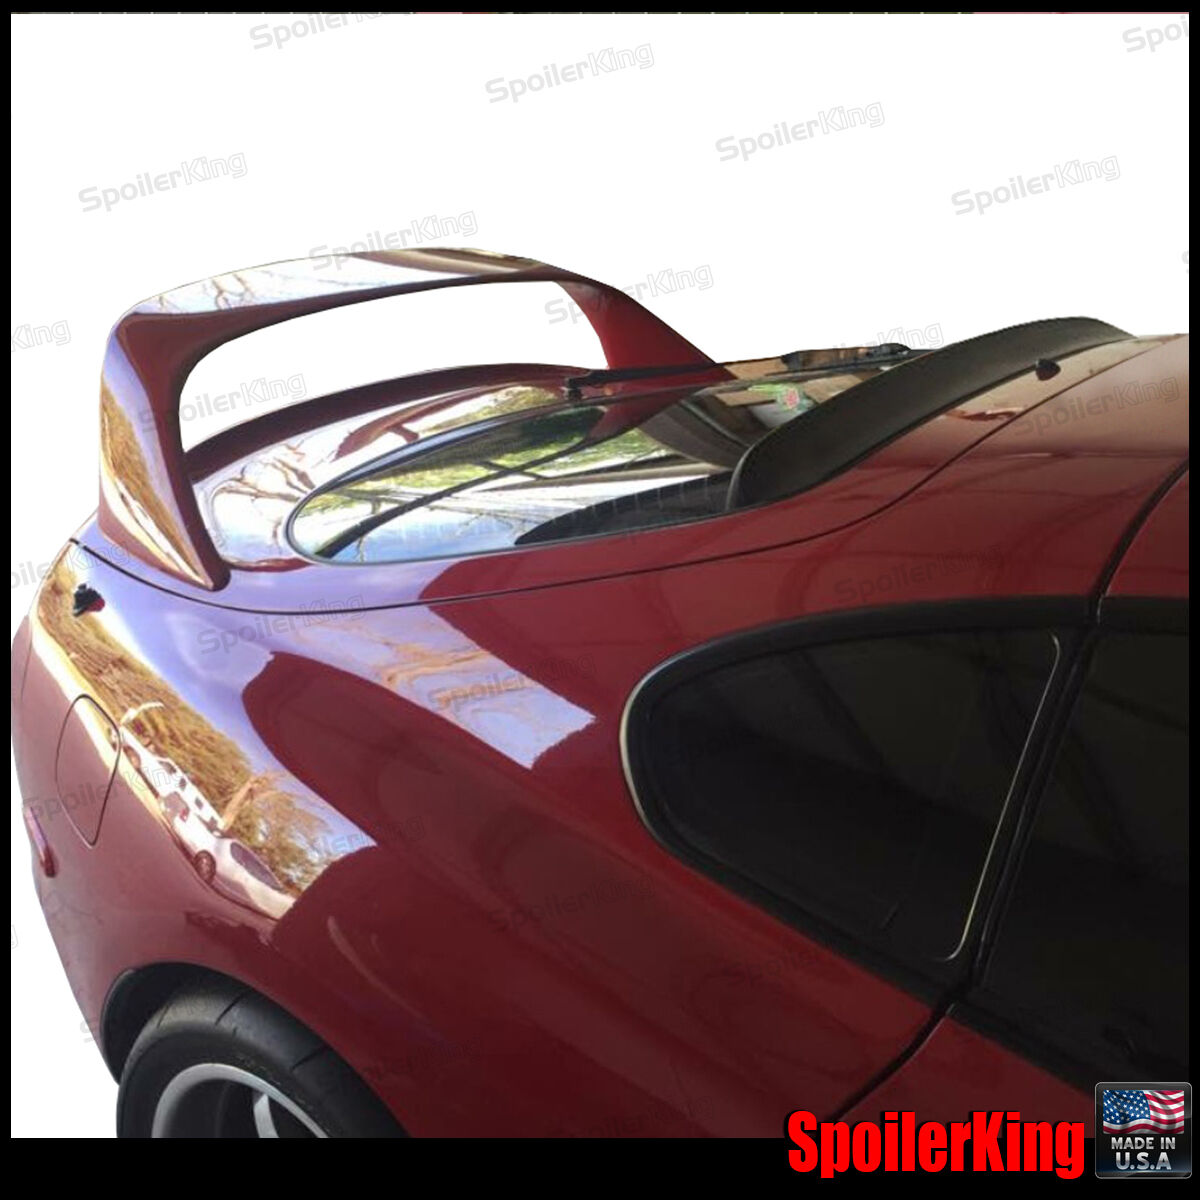 284R Fits: Maserati Ghibli All 2014-On 284R Rear Roof Spoiler Window Wing